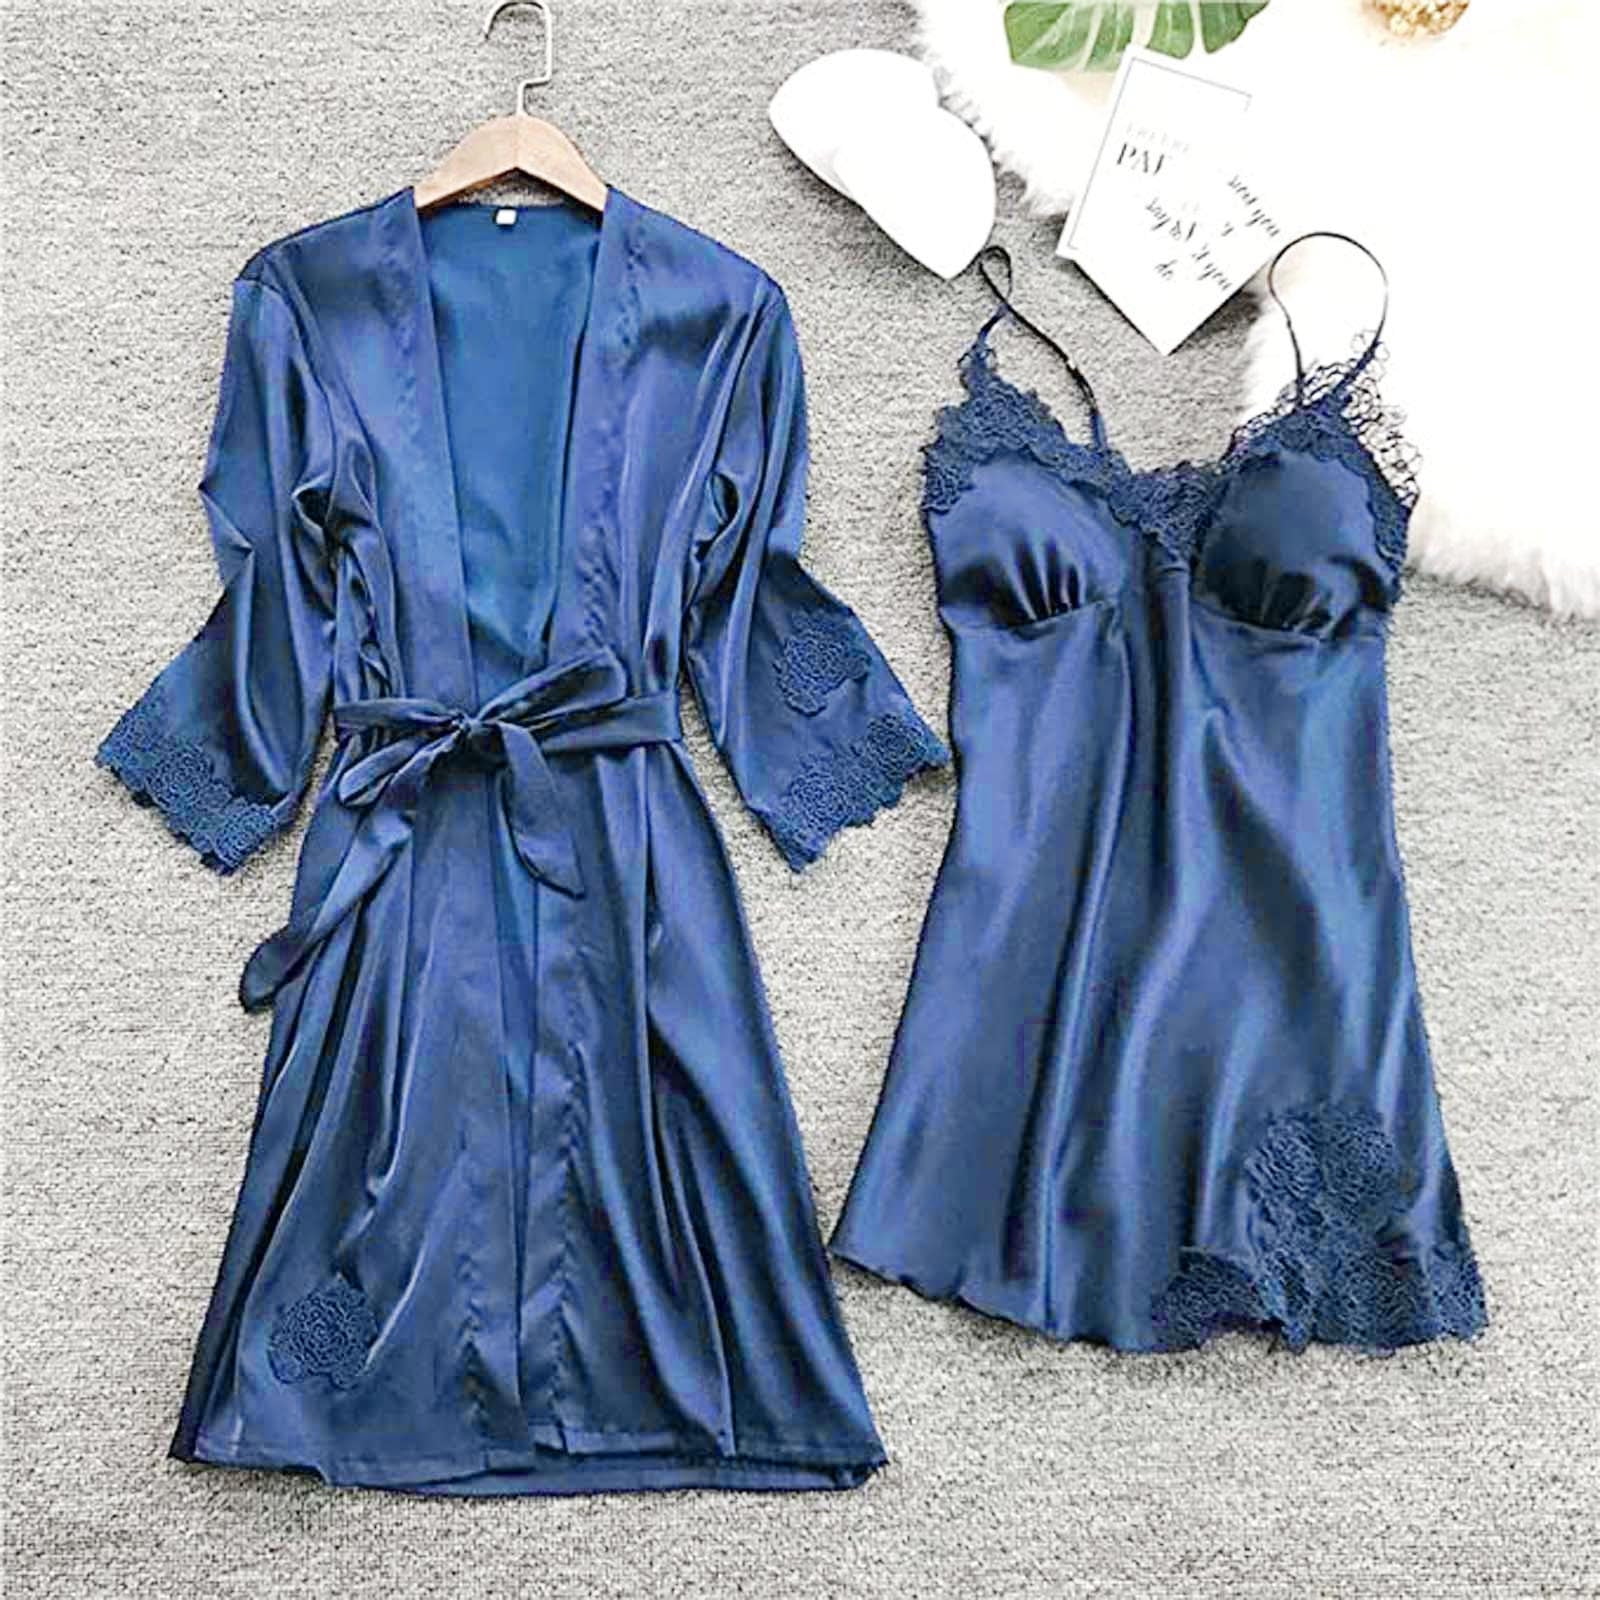 Xysaqa Women Satin Nightgown with Robes Dress Set 2 Piece Lace Nightwear  Pajama Nightdress Sleepwear Set S-XL 